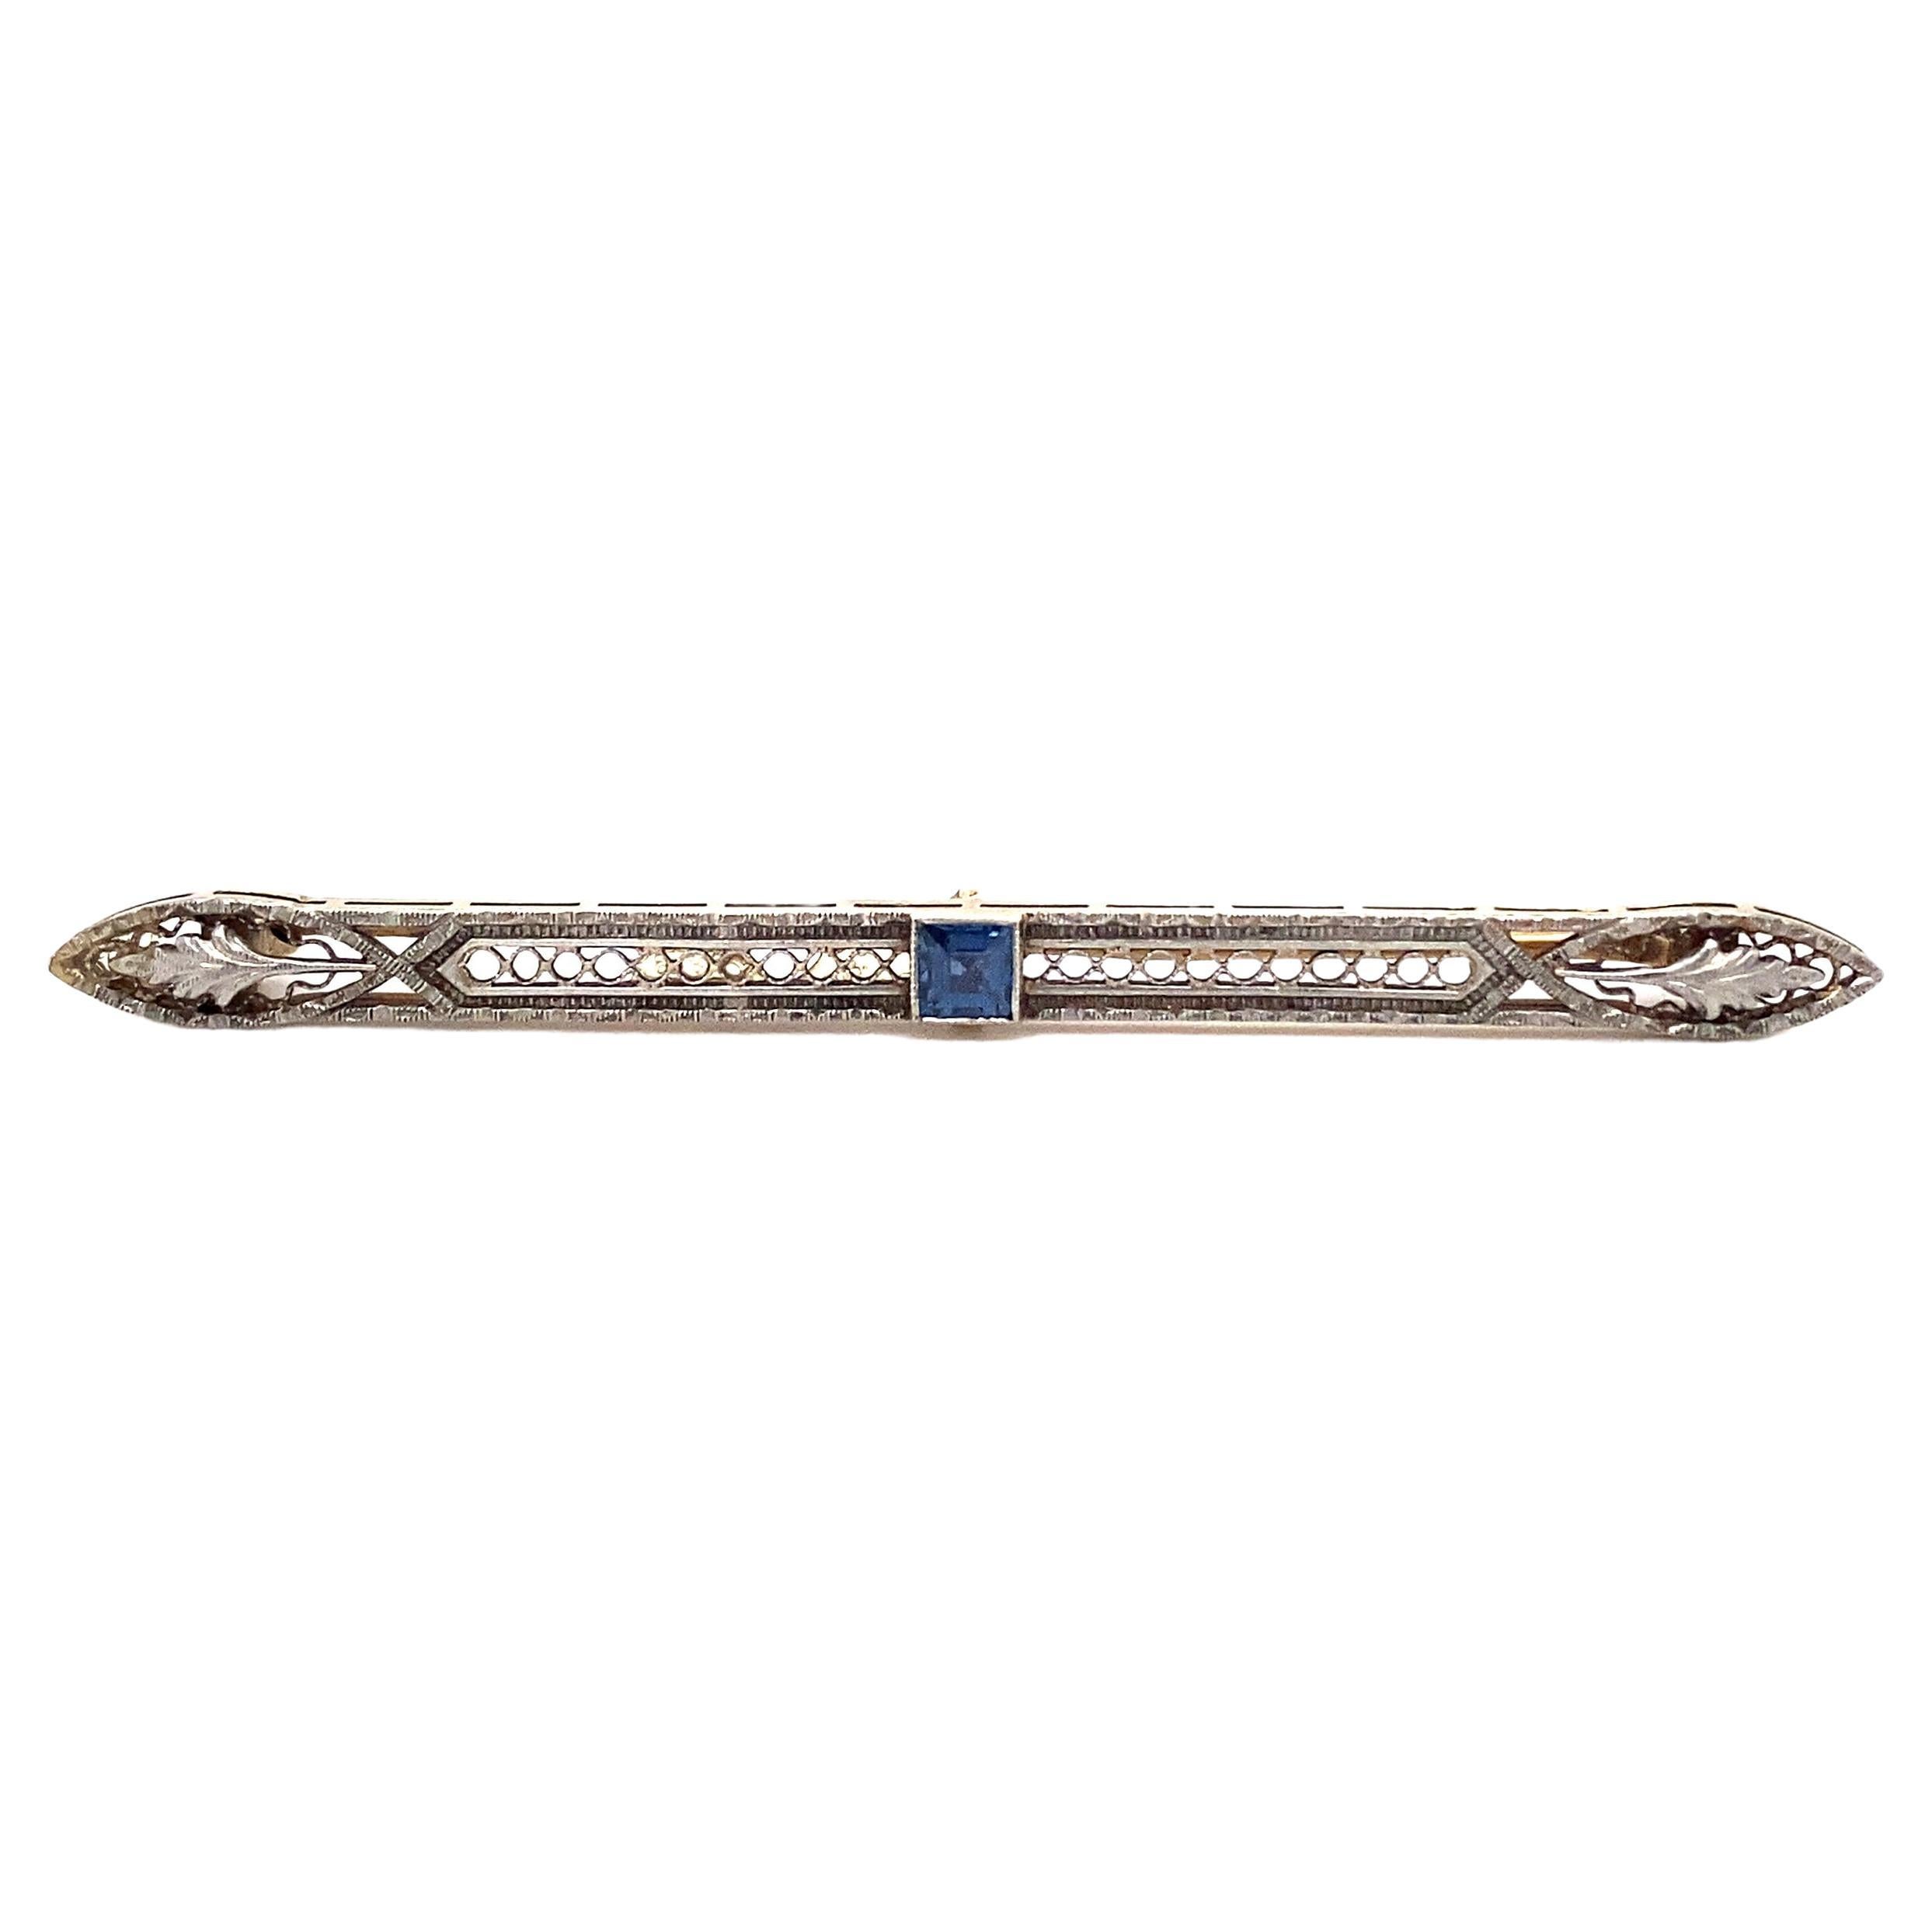 1920s Art Deco Filigree Sapphire Bar Pin in 14 Karat Gold and Platinum